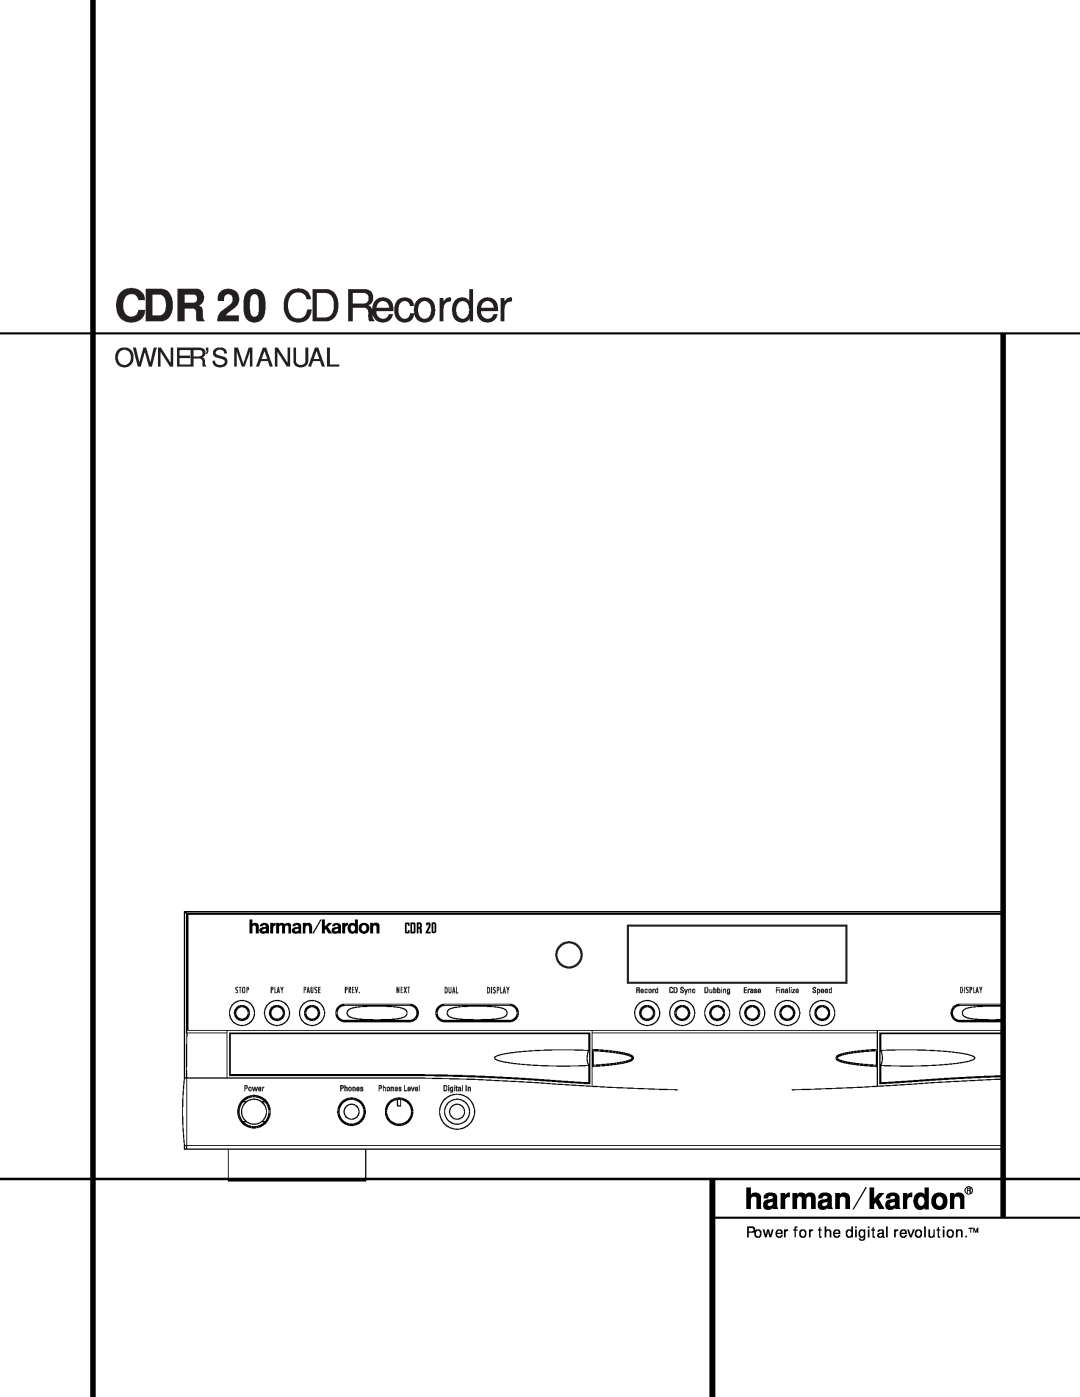 Harman-Kardon owner manual CDR 20 CD Recorder 